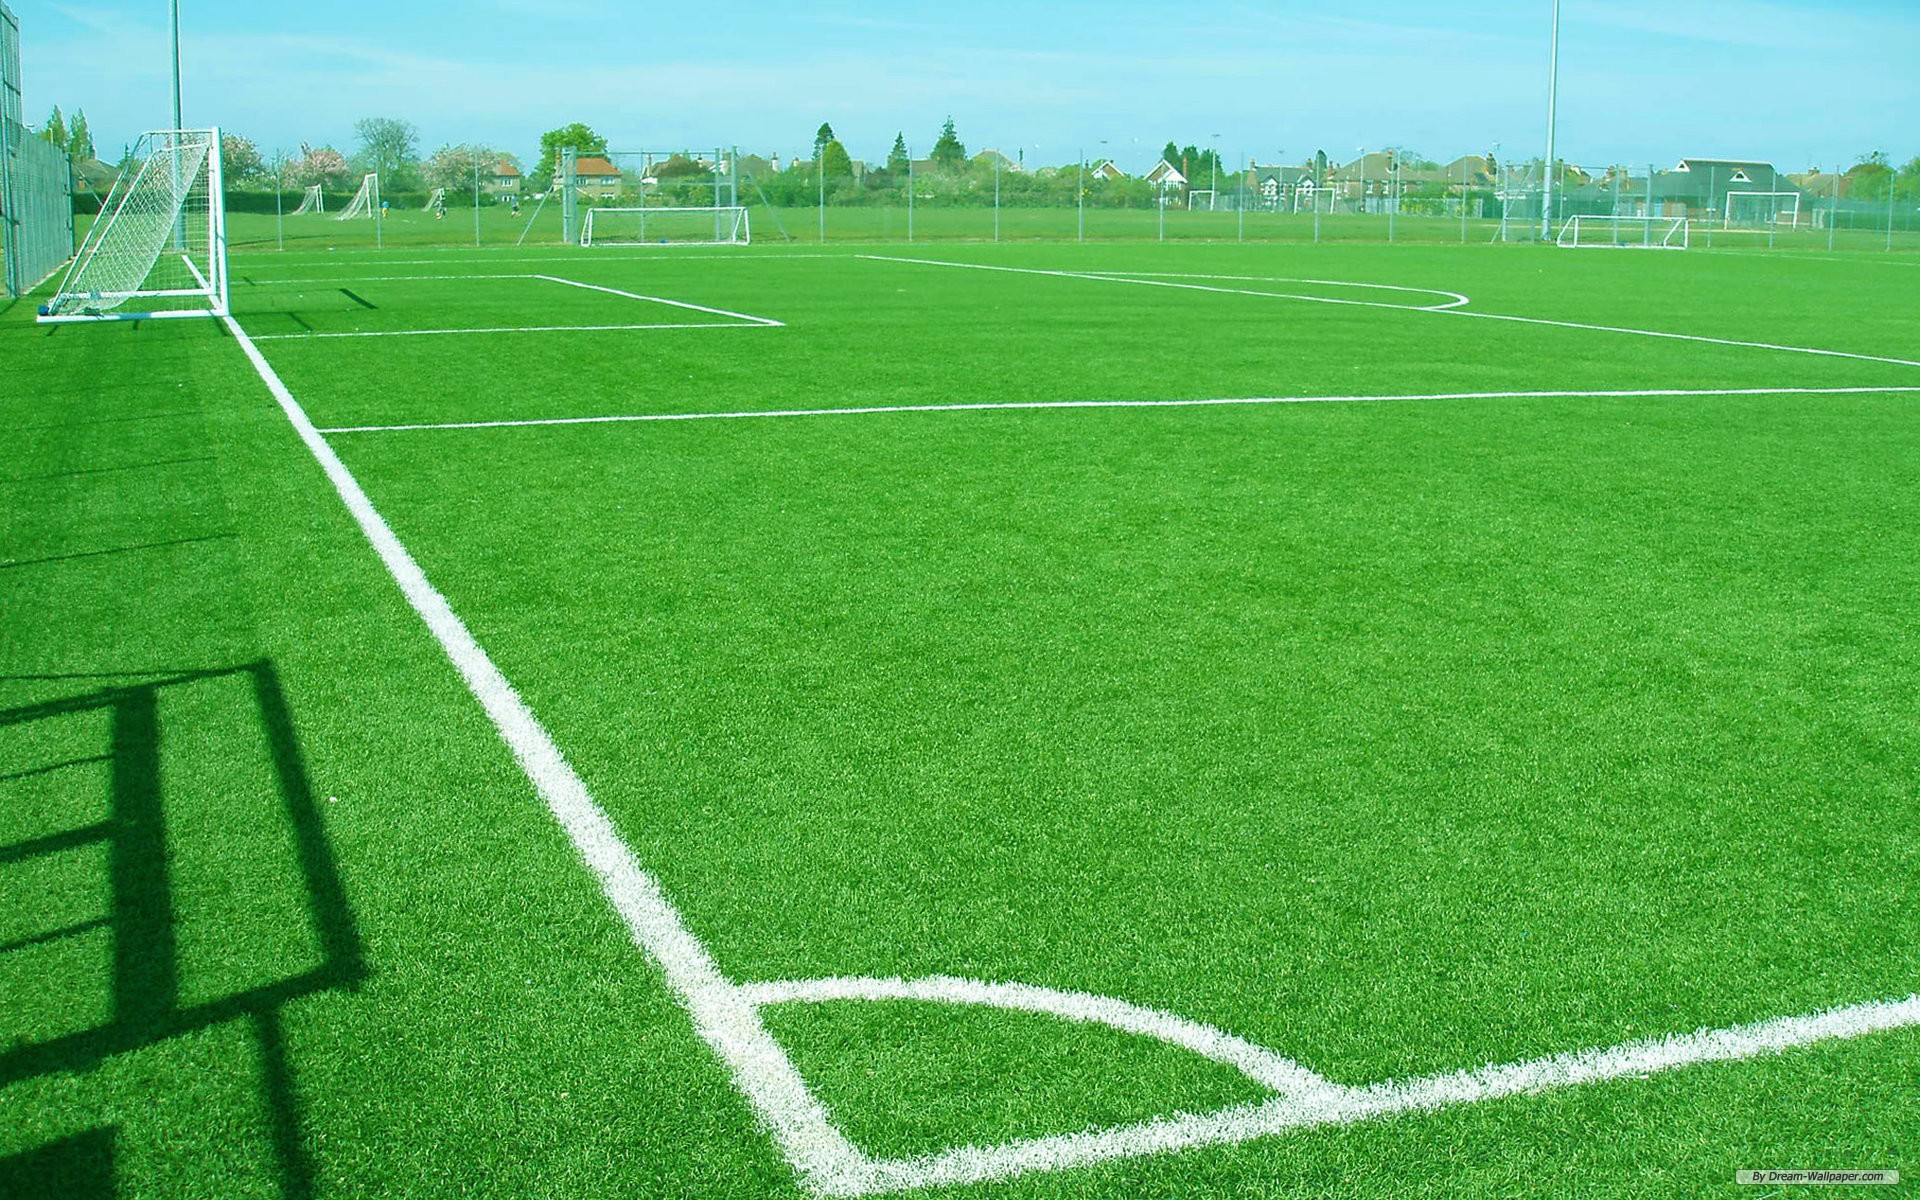 fond d'écran de terrain de football,herbe,gazon artificiel,sol,pelouse,famille d'herbe